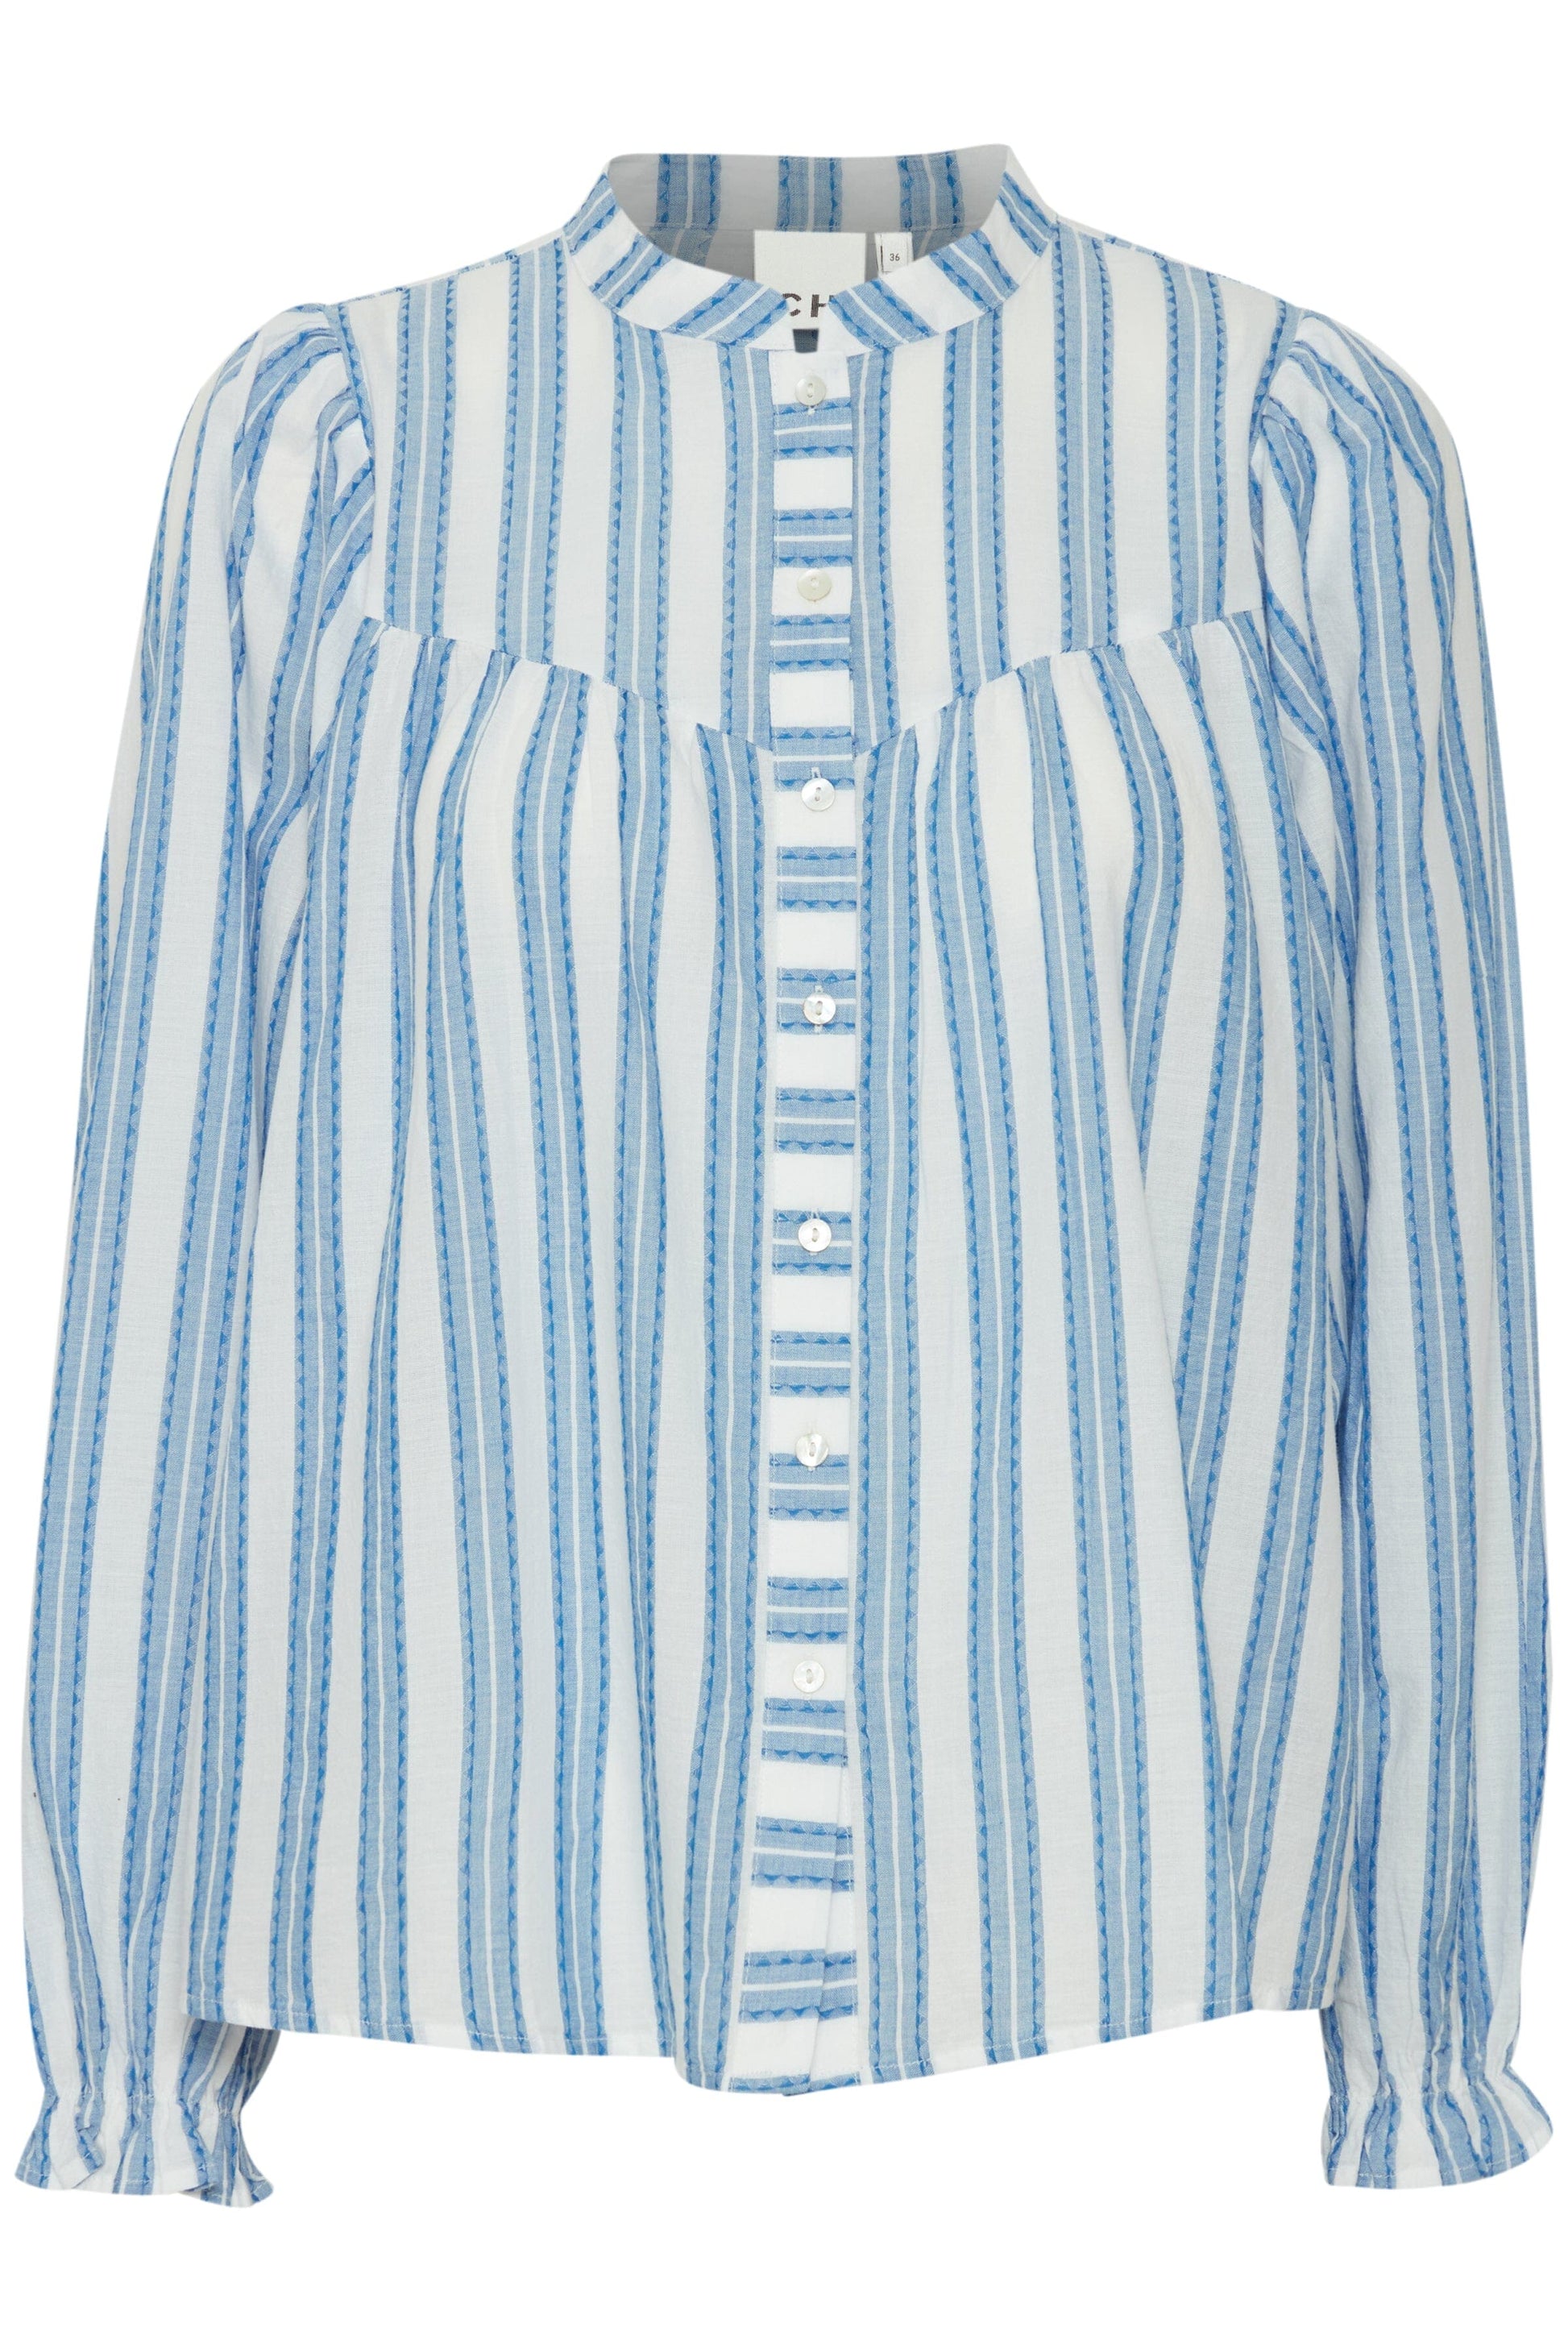 Ezomo Shirt in Palace Blue Stripe Shirt Ichi 